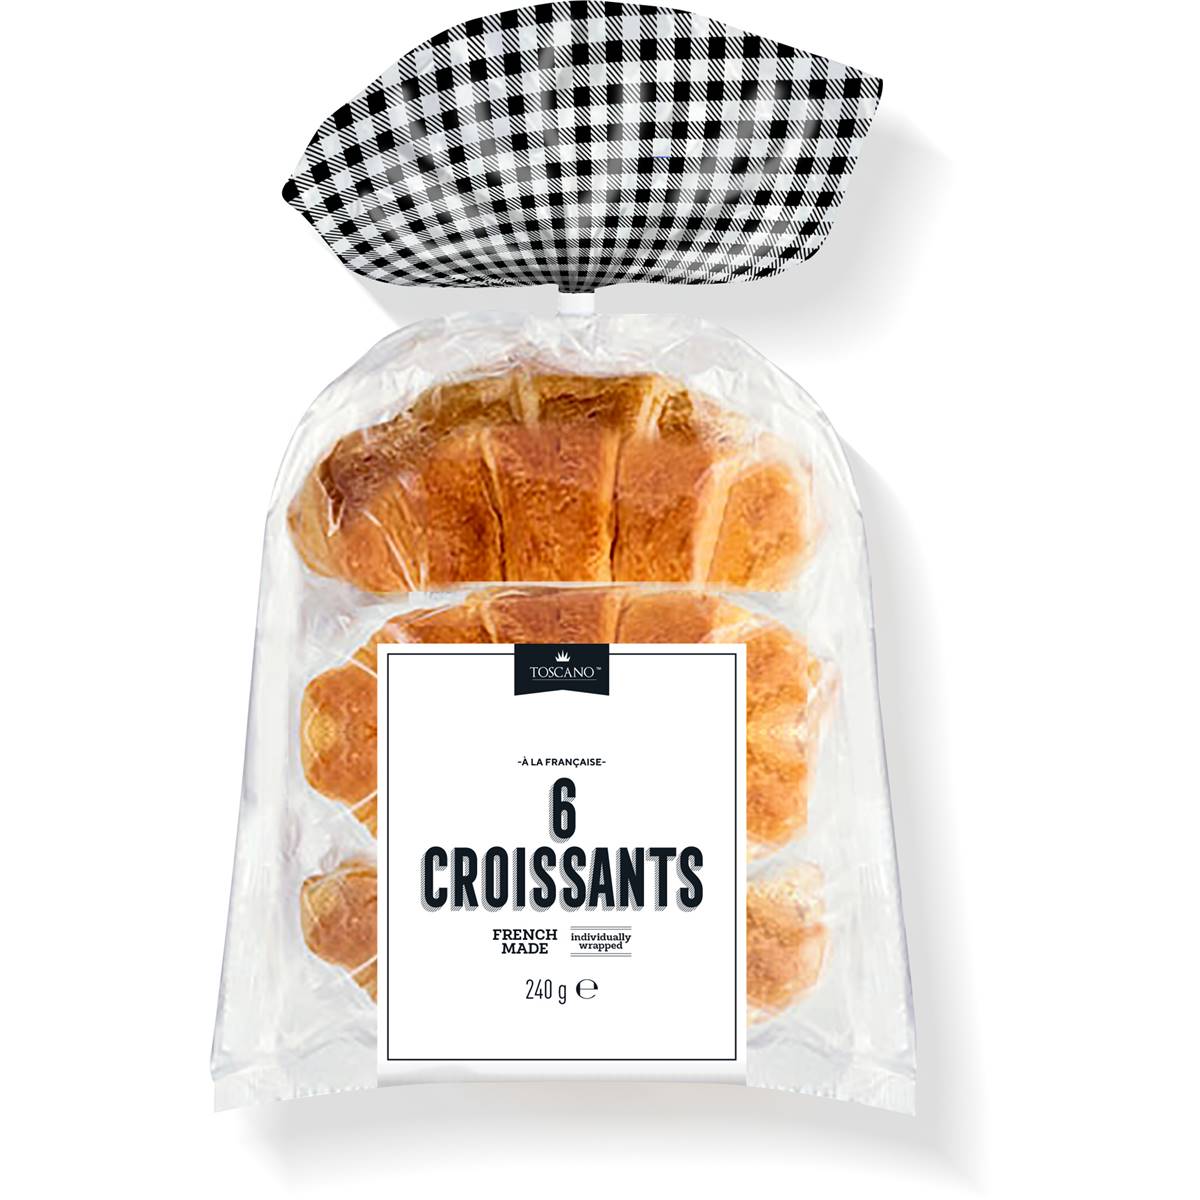 Toscano Croissants 240g 6pk